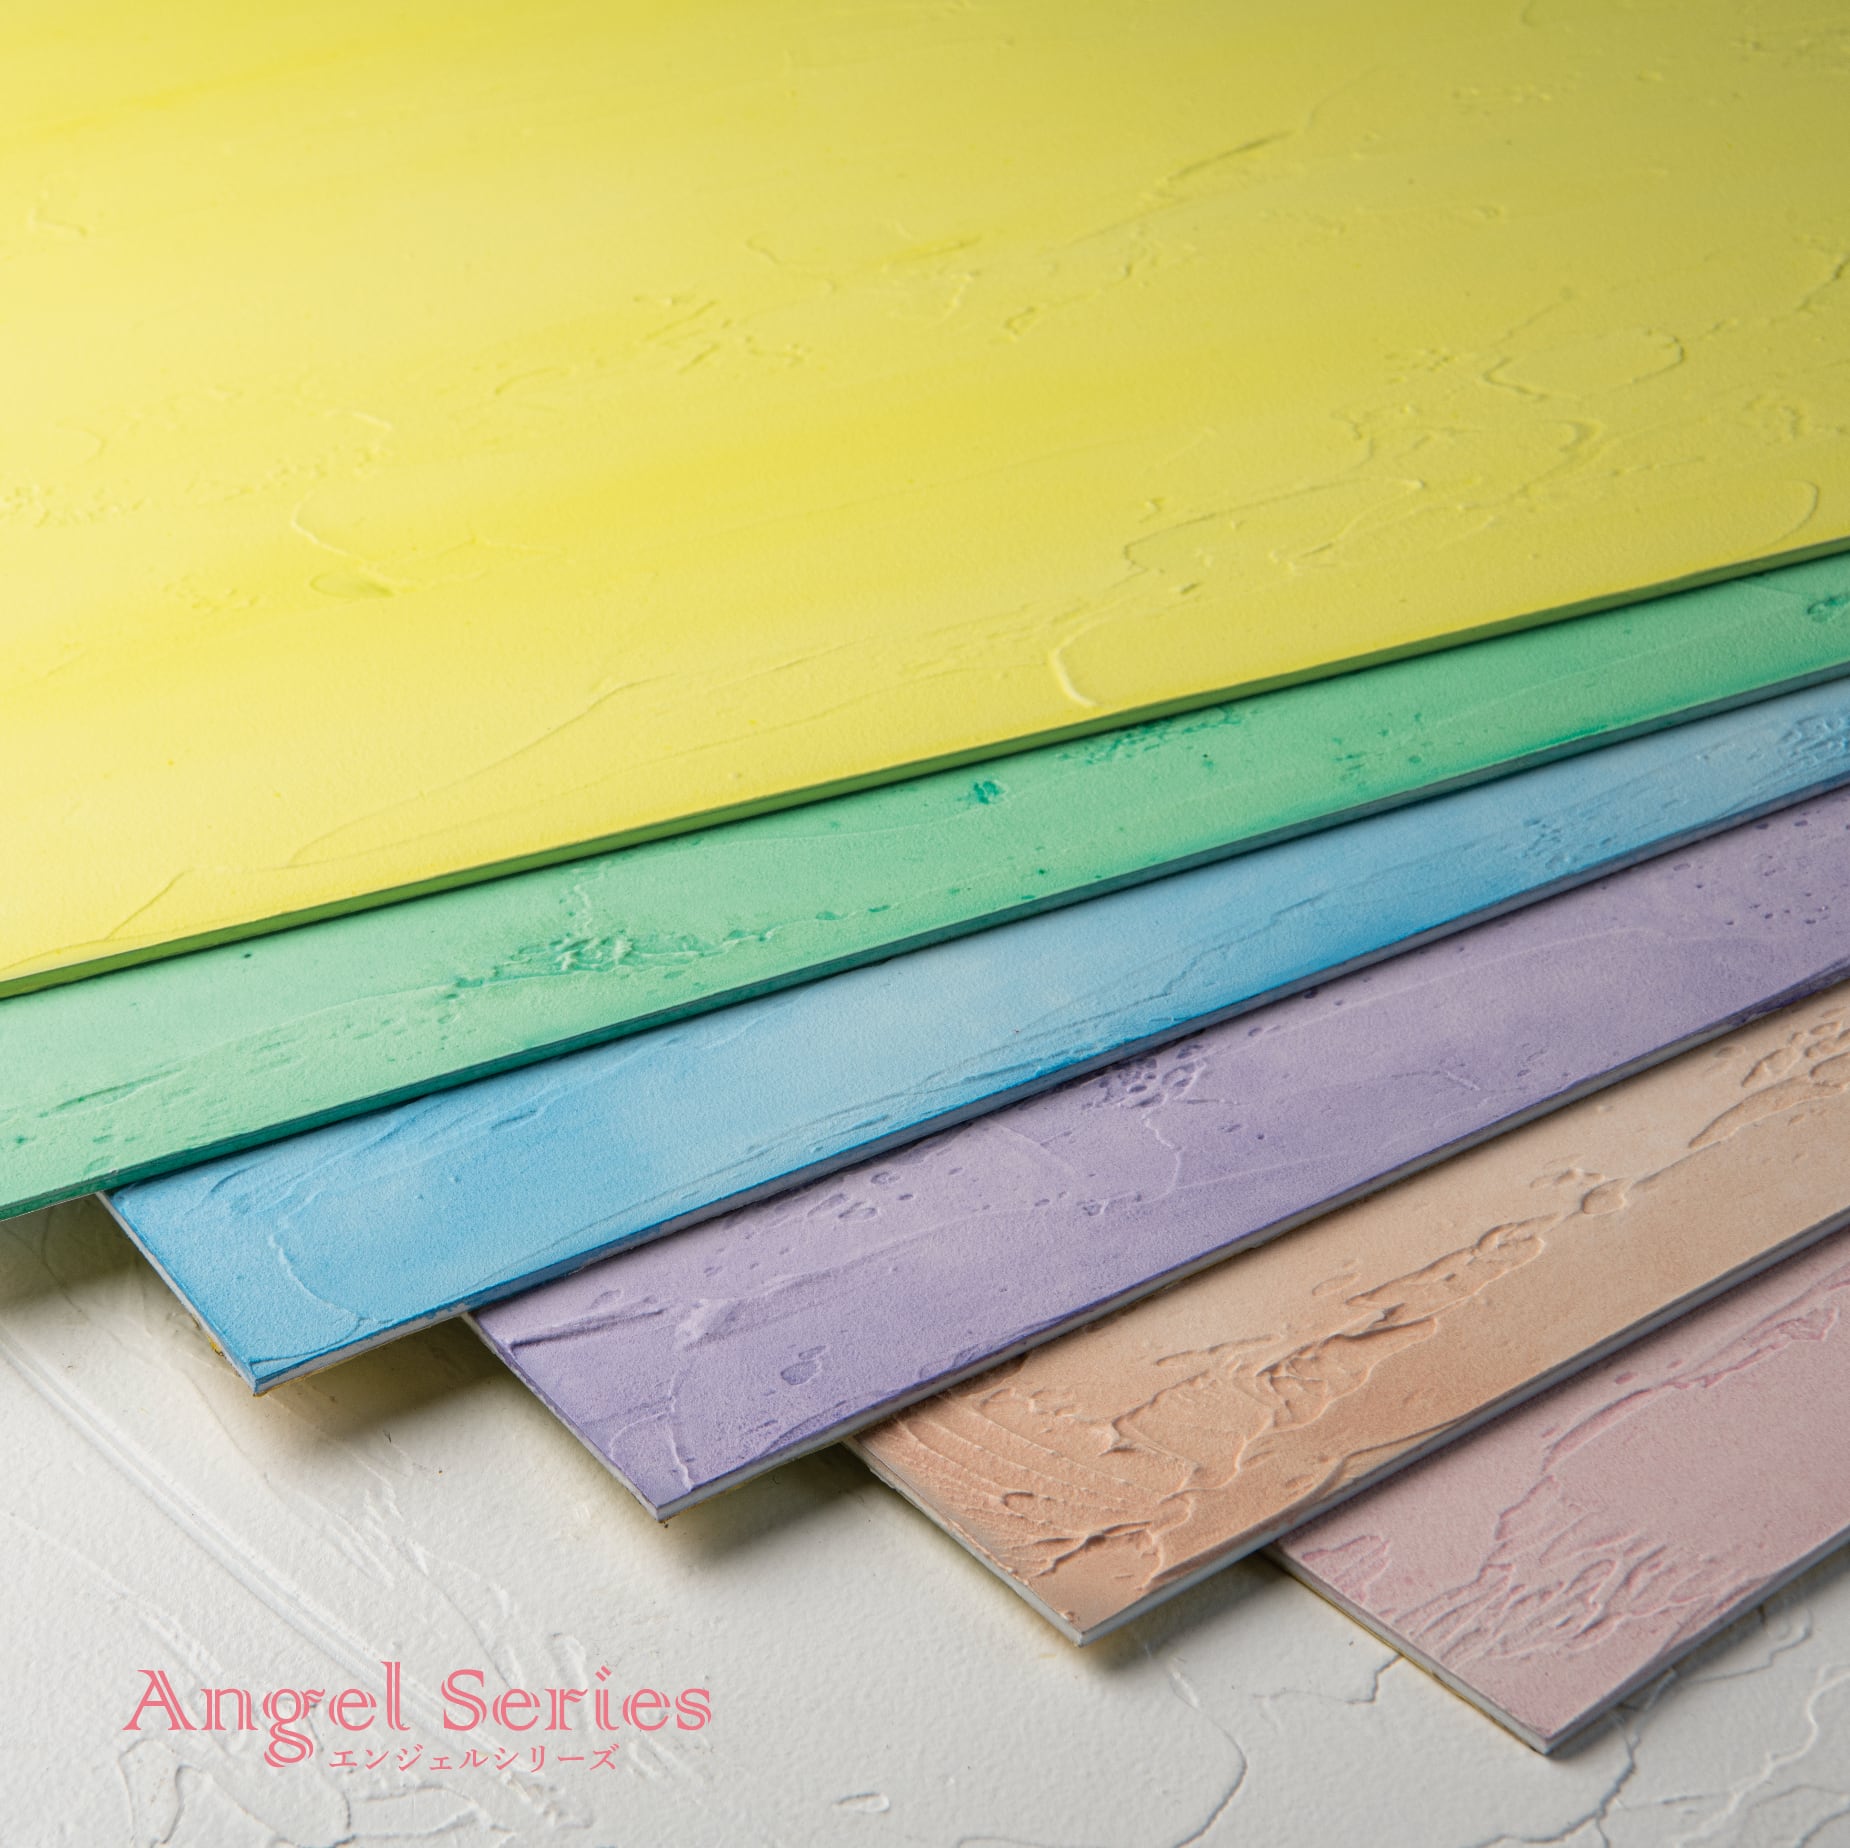 BAEL PHOTO BOARD PRO Angel Pastel color series〈バラキエルパステルグリーン〉